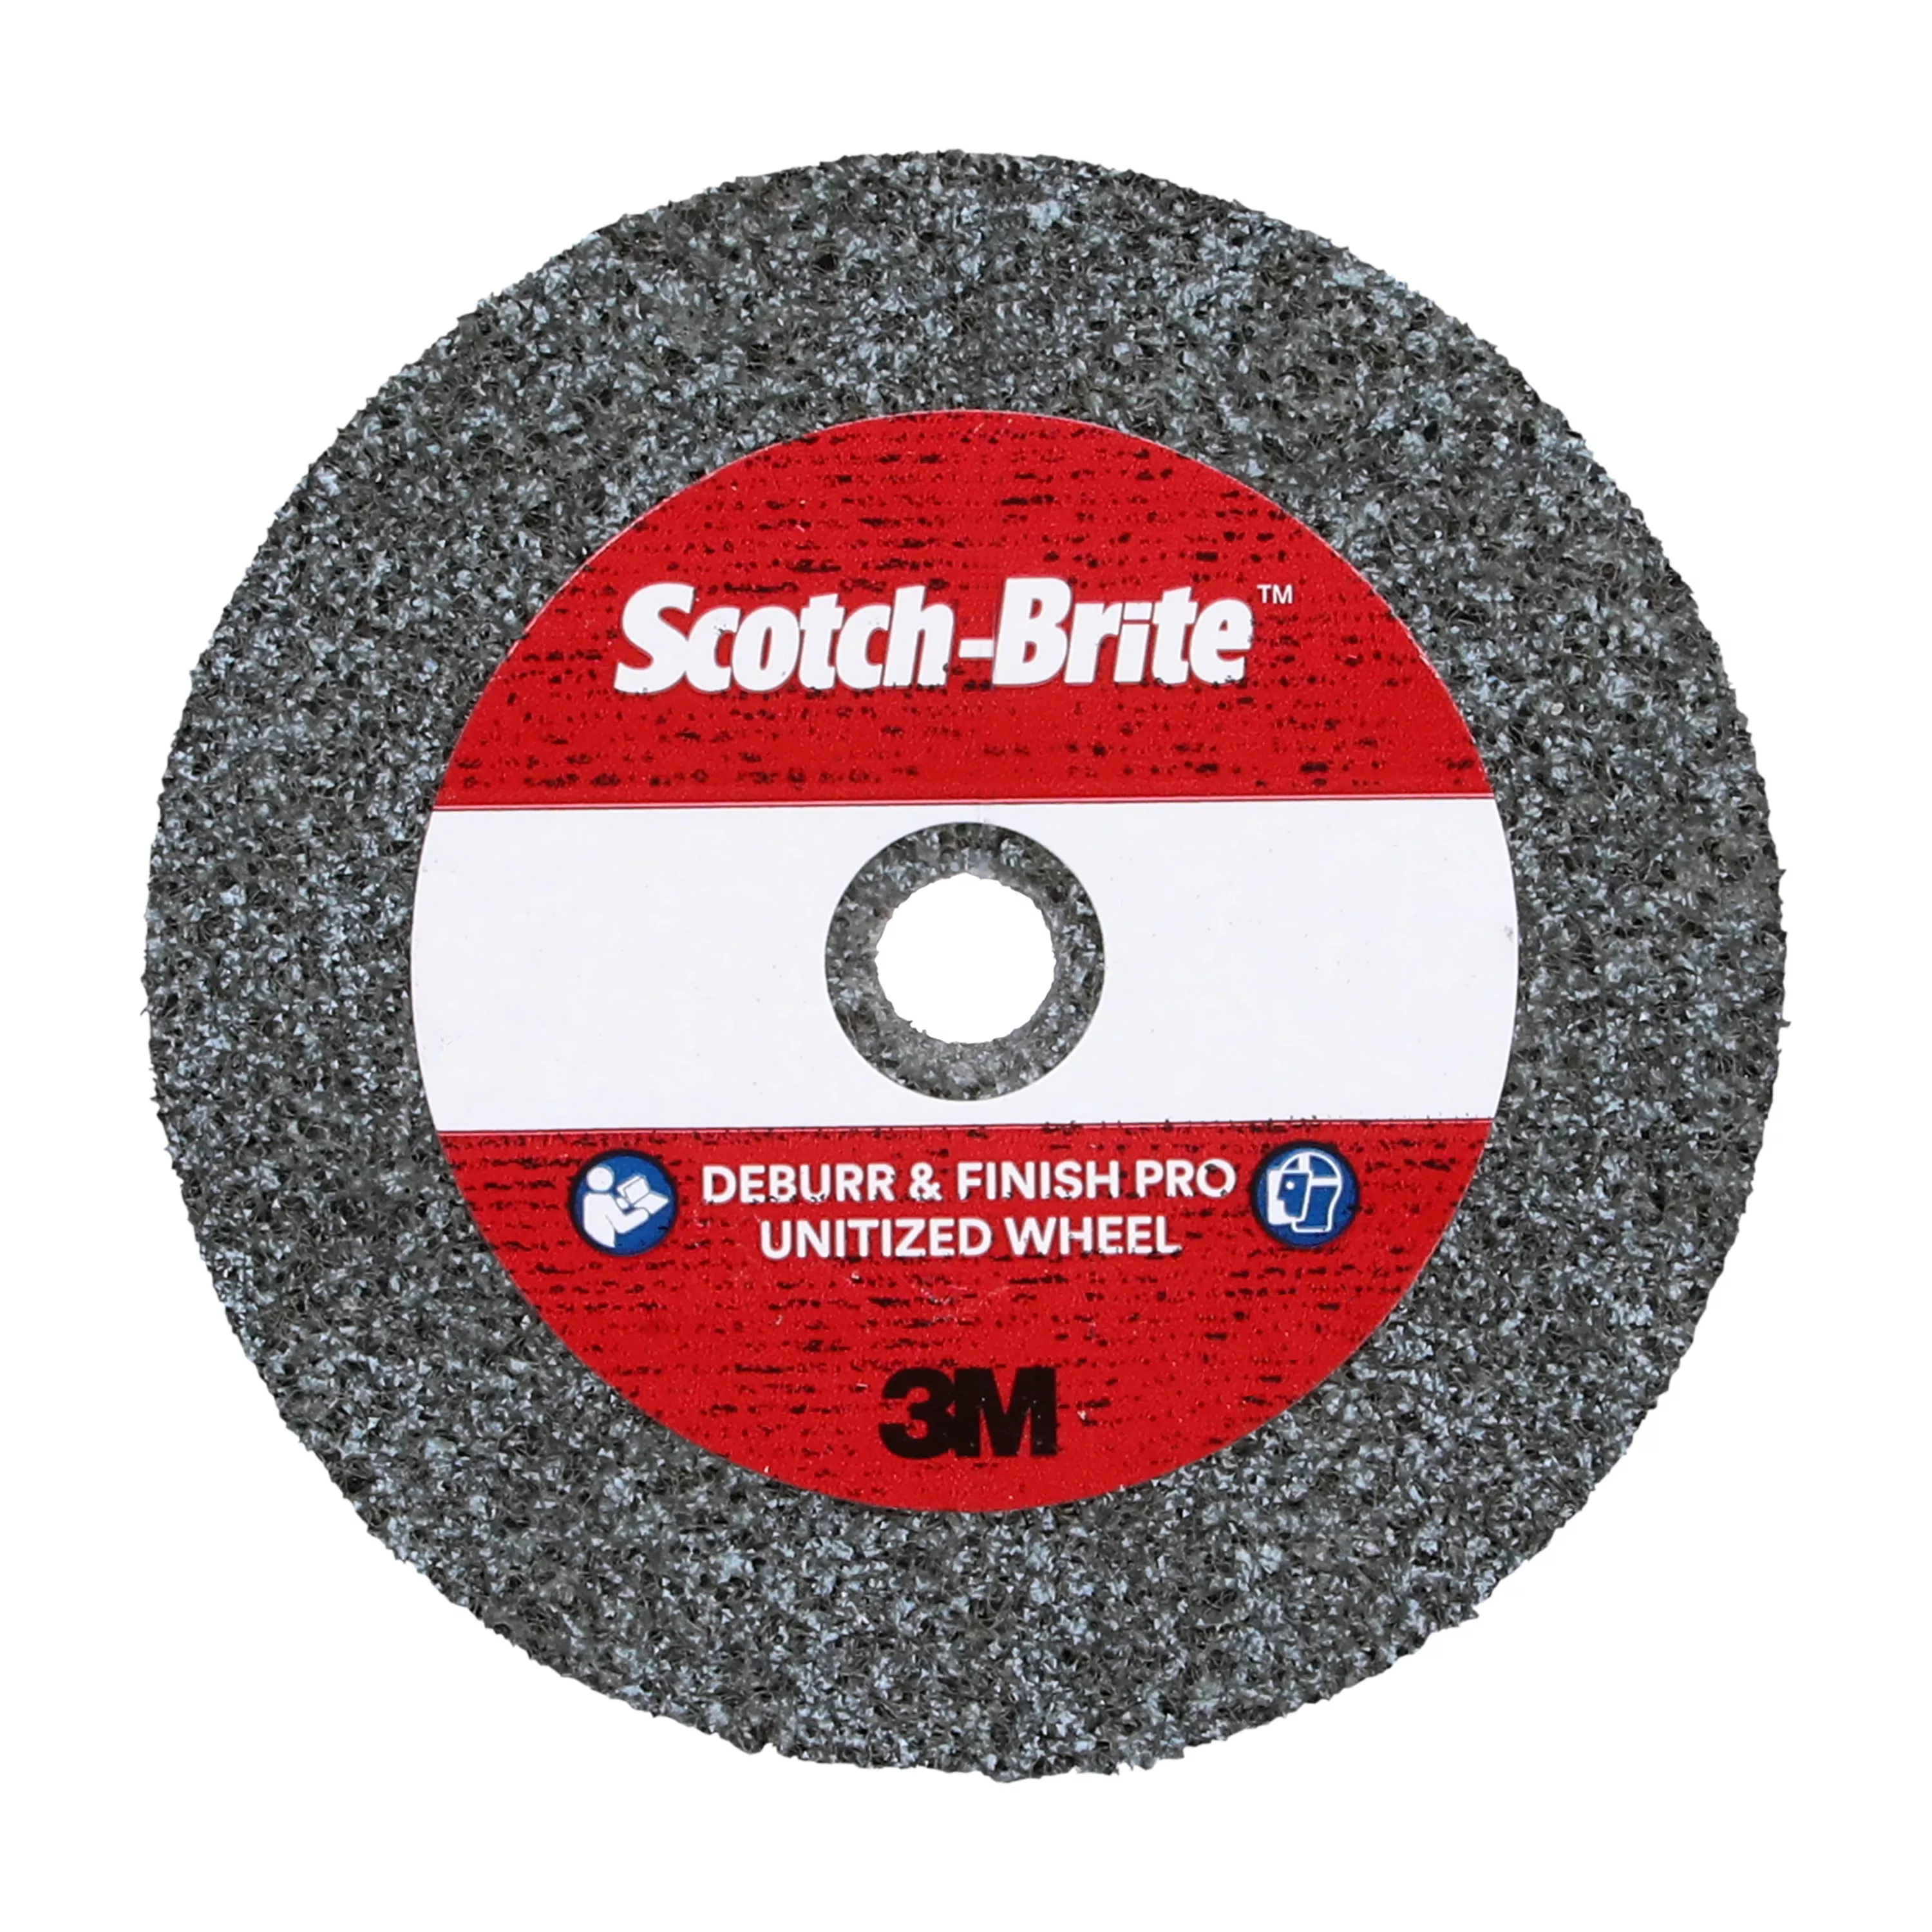 SKU 7100053417 | Scotch-Brite™ Deburr & Finish Pro Unitized Wheel